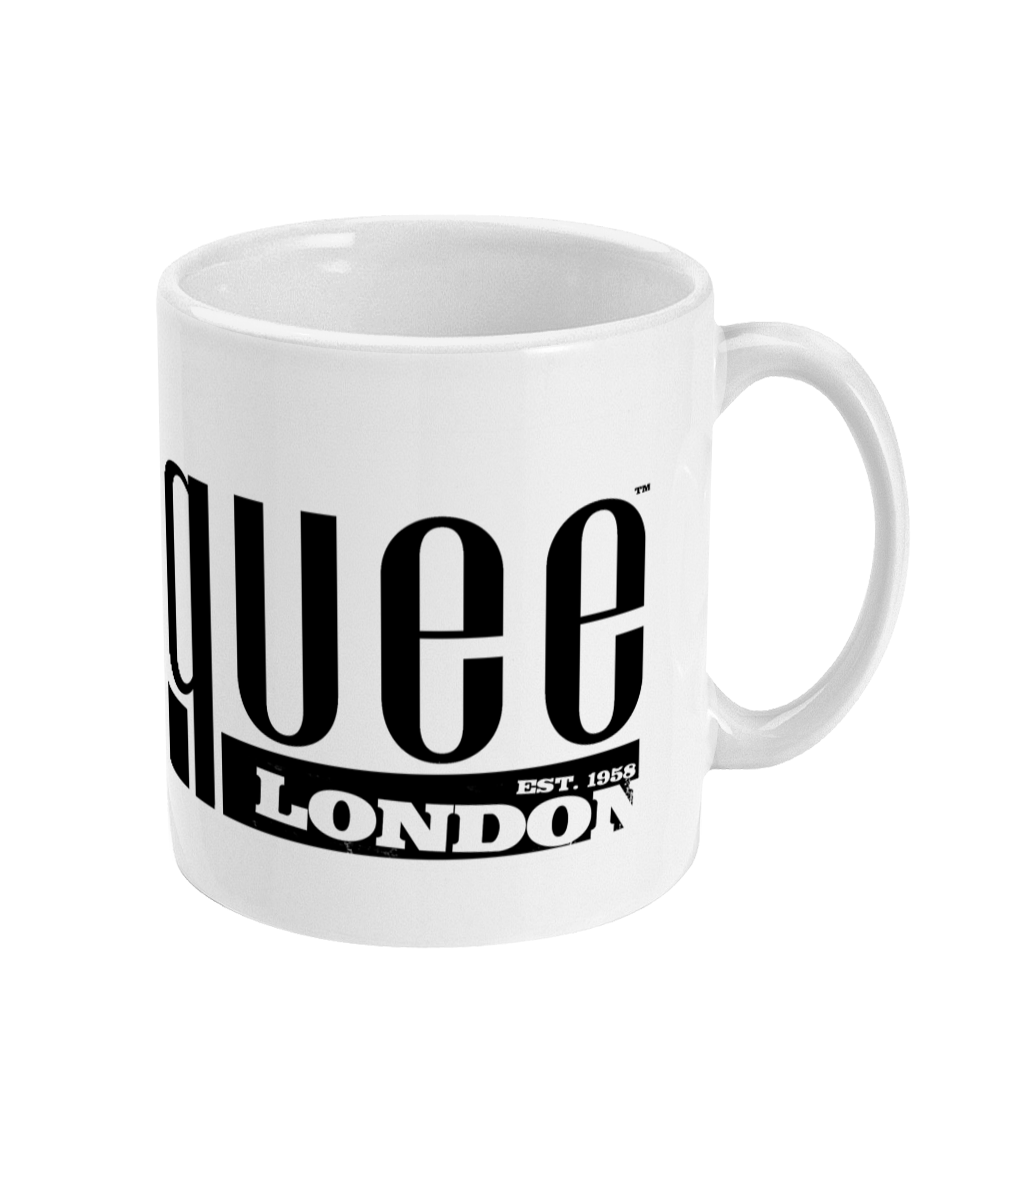 Marquee London Mug White